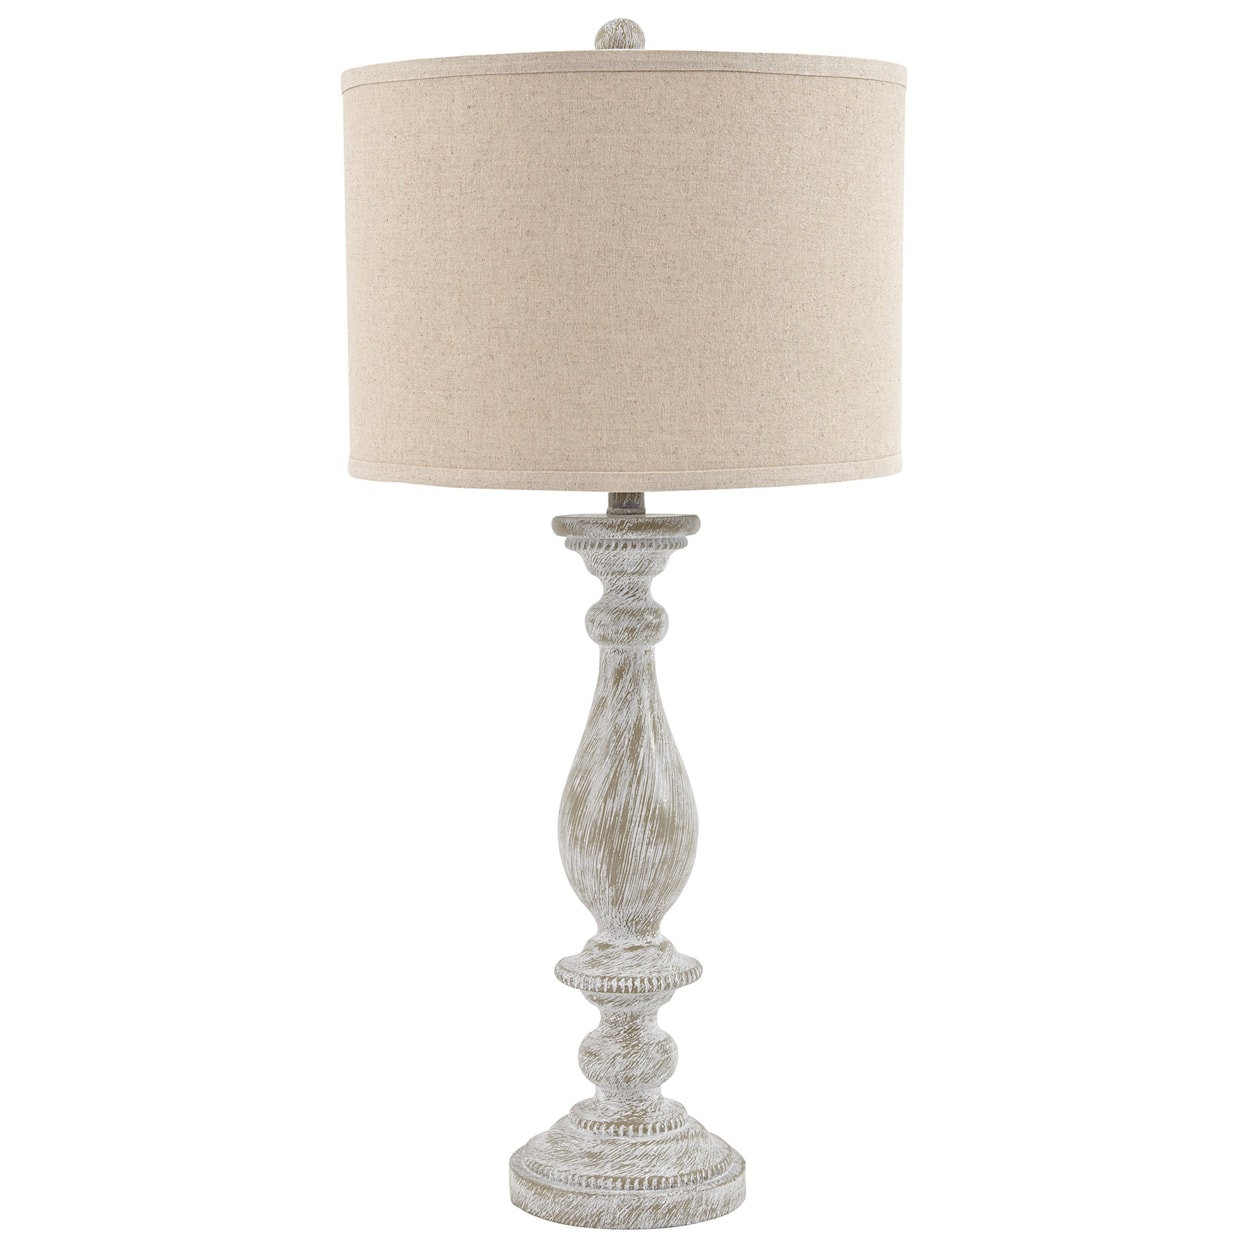 Ashley Furniture Signature Design Lamps - Vintage Style Bernadate Whitewash Table Lamp